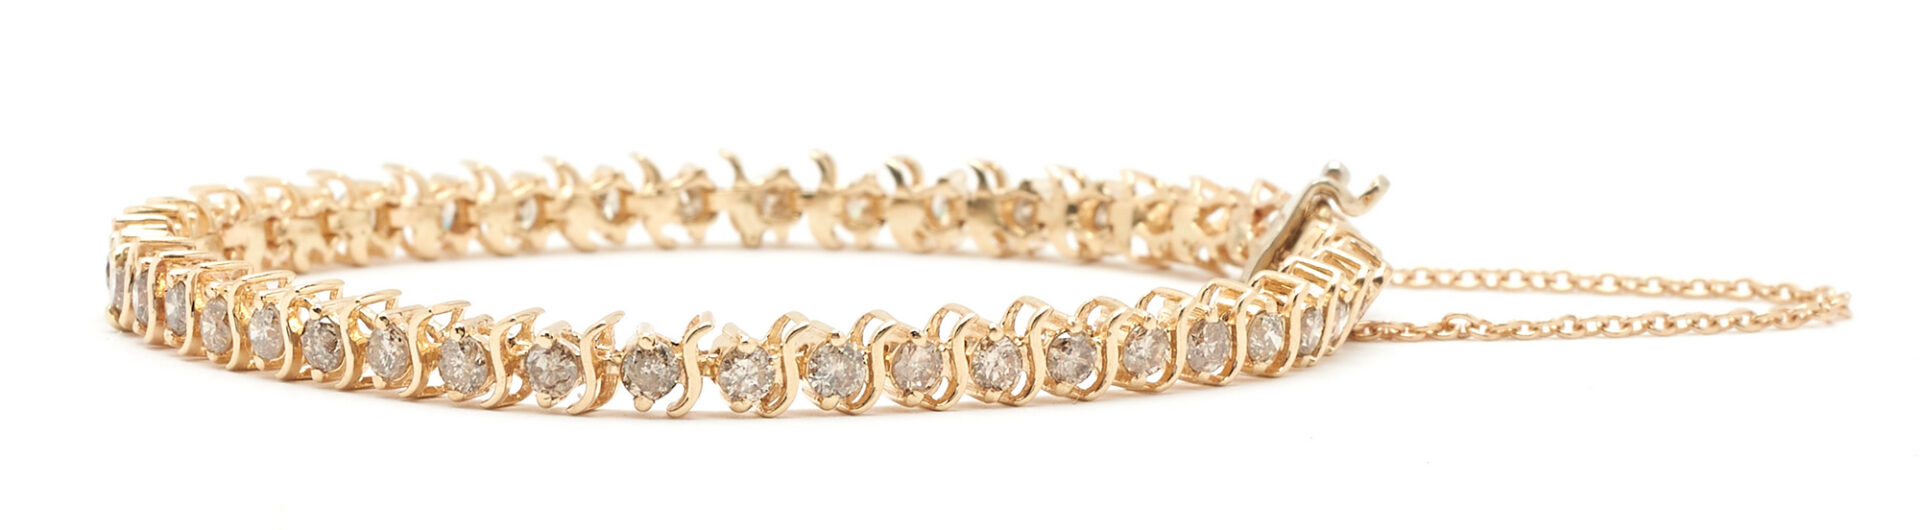 Lot 982: 14K Gold & Diamond Tennis Bracelet